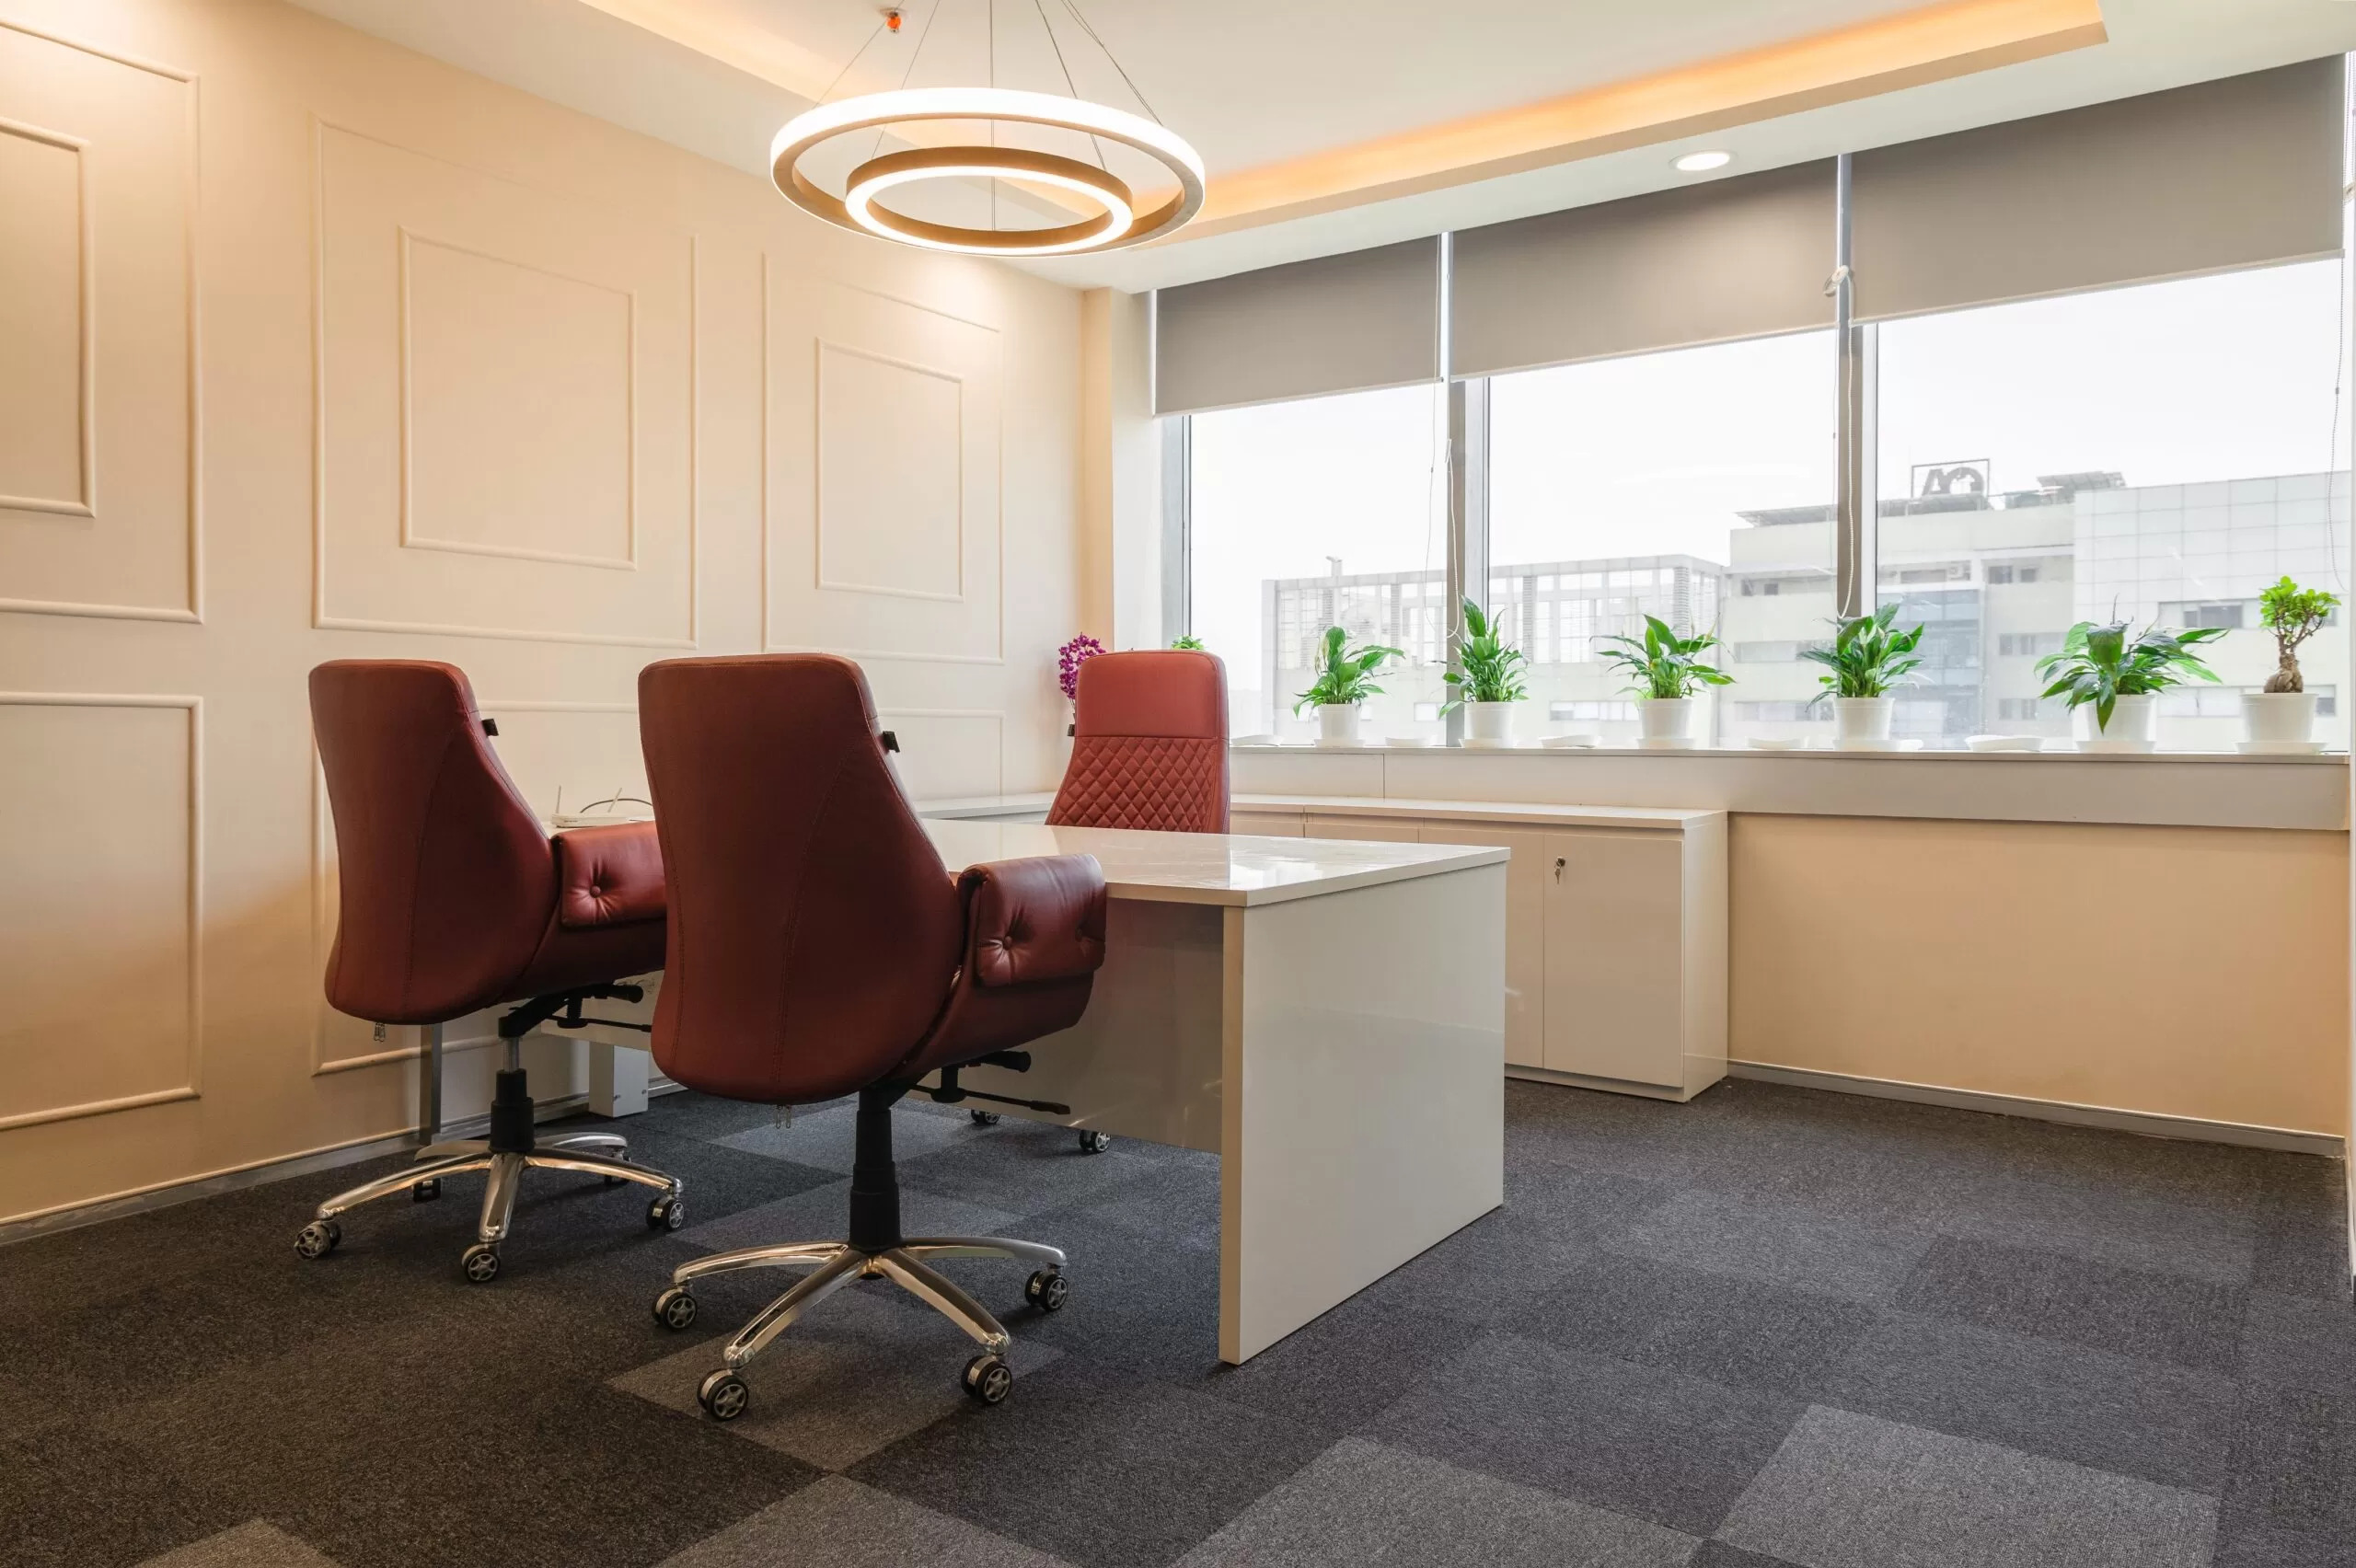 Modern executive office table design featuring ergonomic setup and sleek aesthetics."